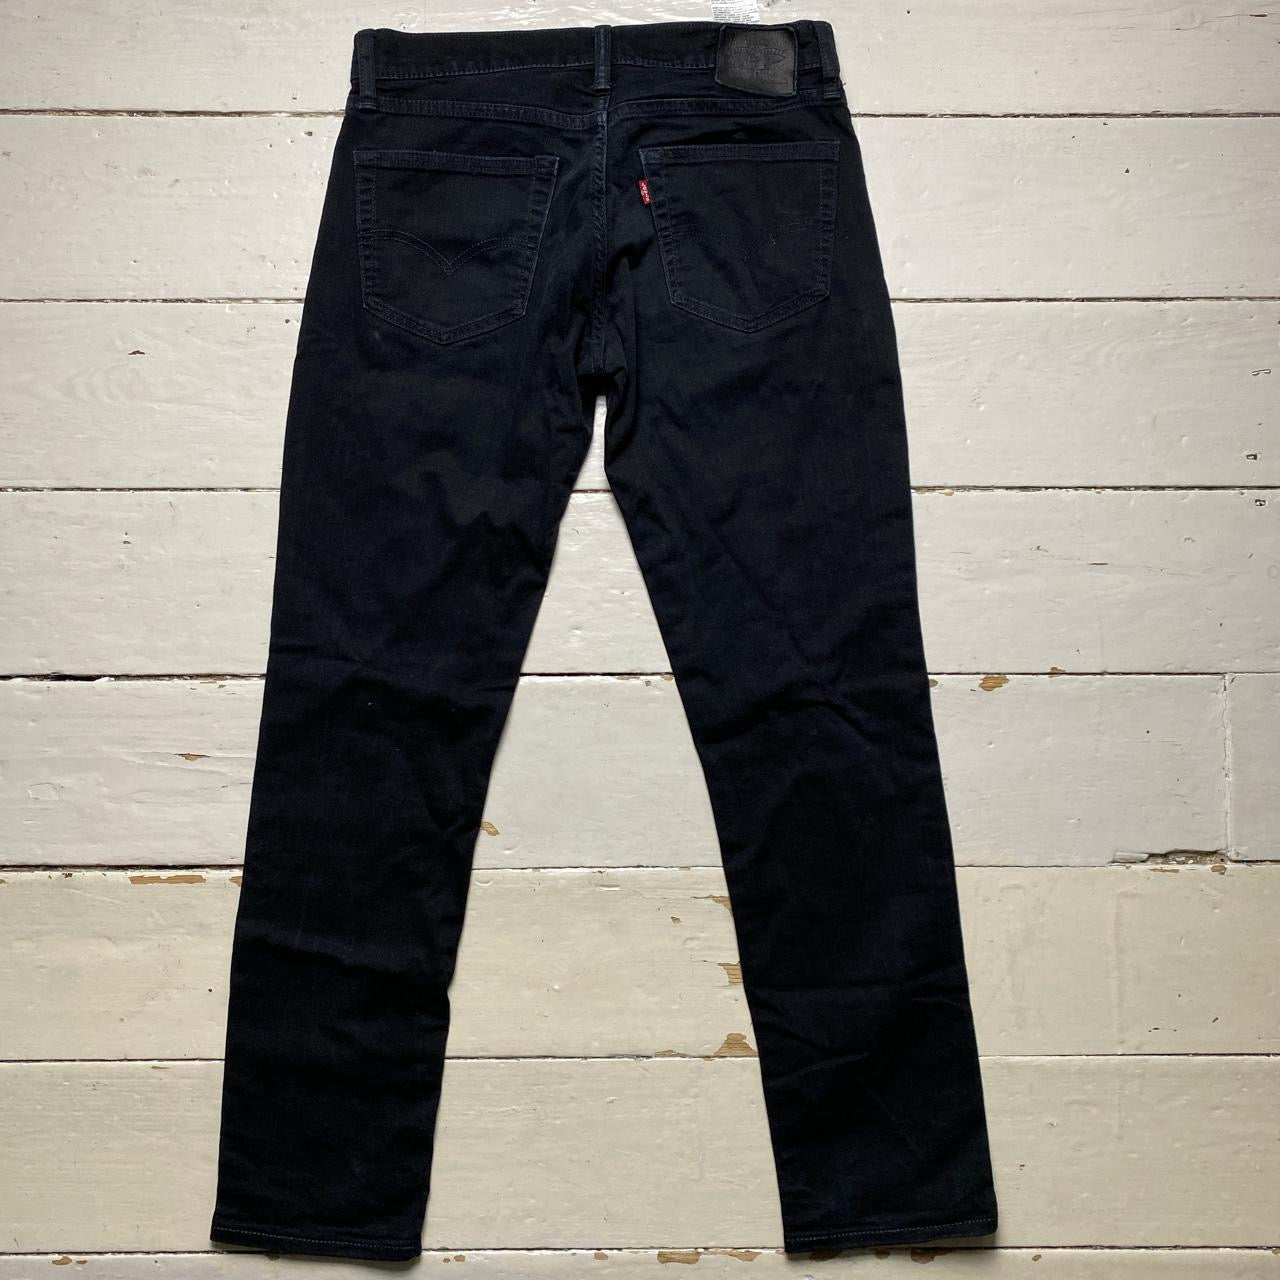 Levis Jet Black Slim Jeans (32/30)